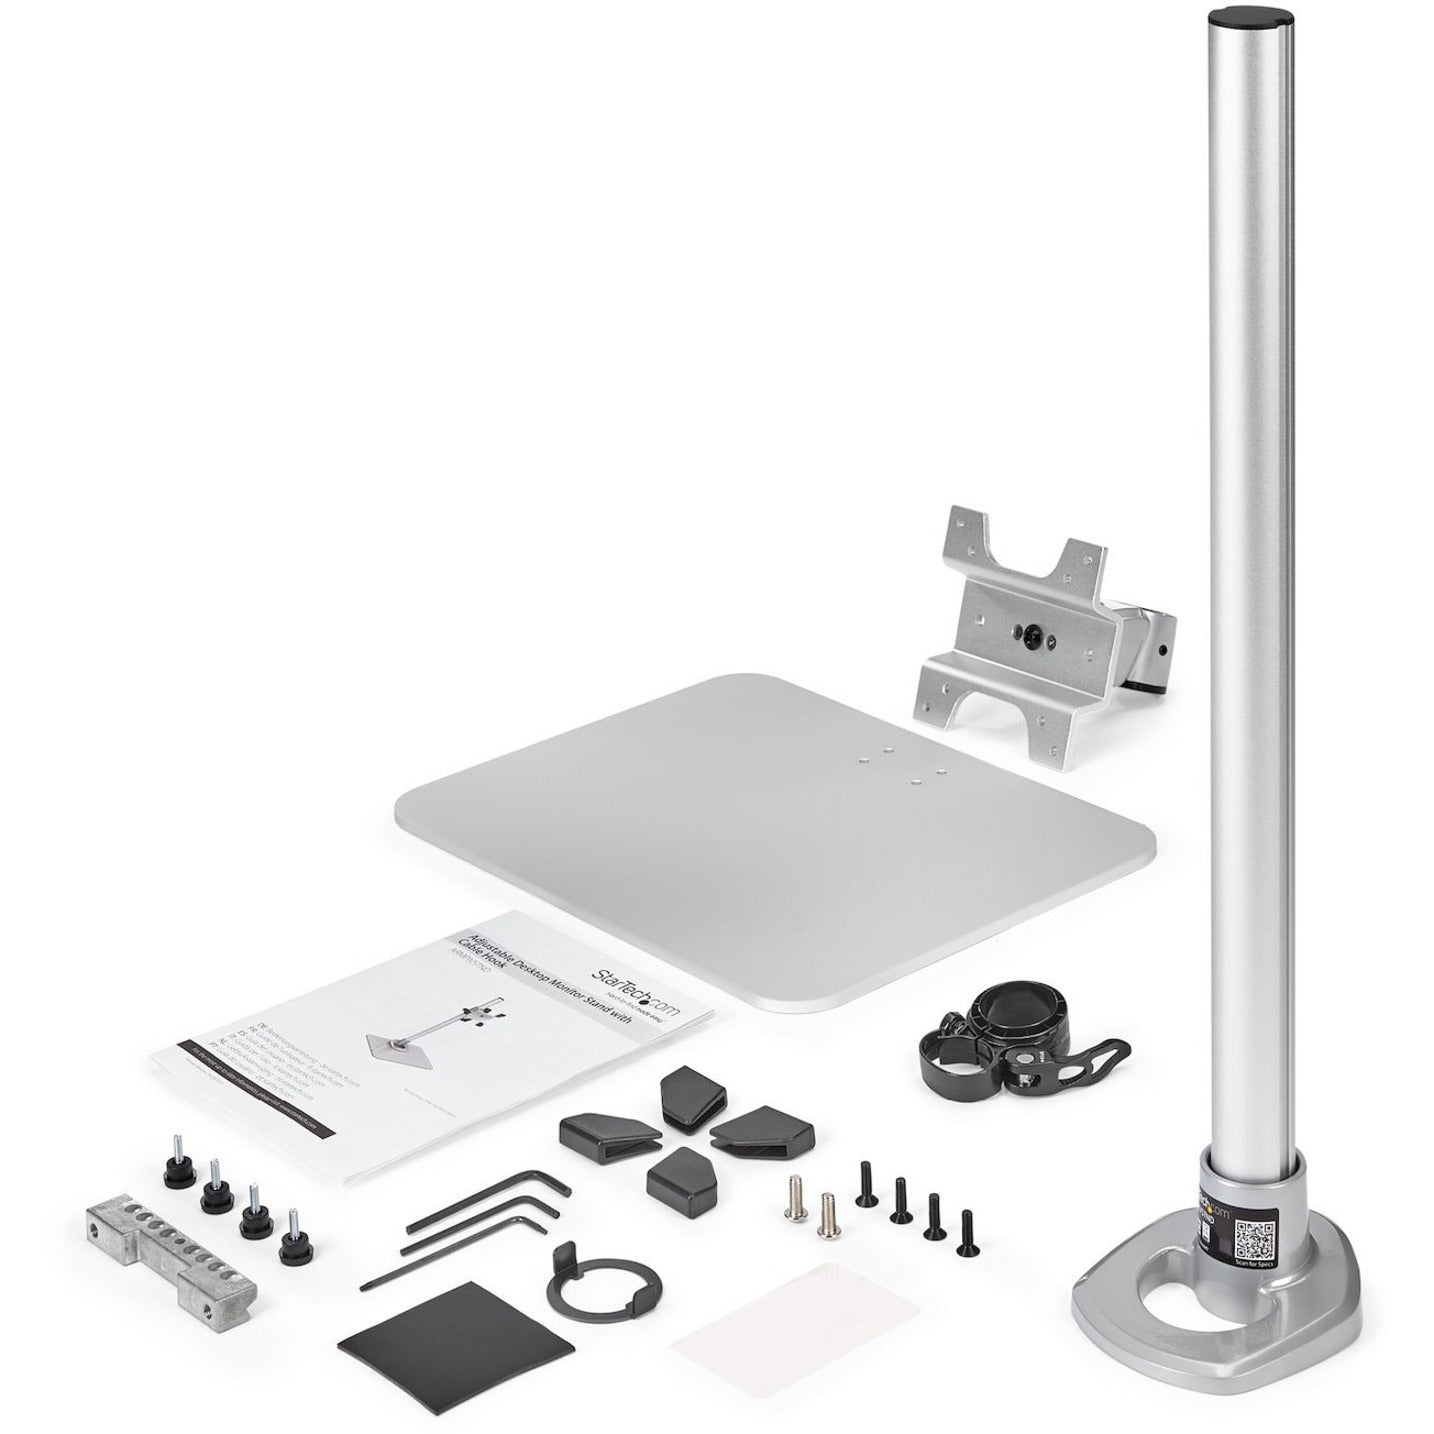 StarTech.com ARMPIVSTND Single Monitor Stand - Adjustable - Steel - Silver, Cable Management, 360° Rotation, Ergonomic